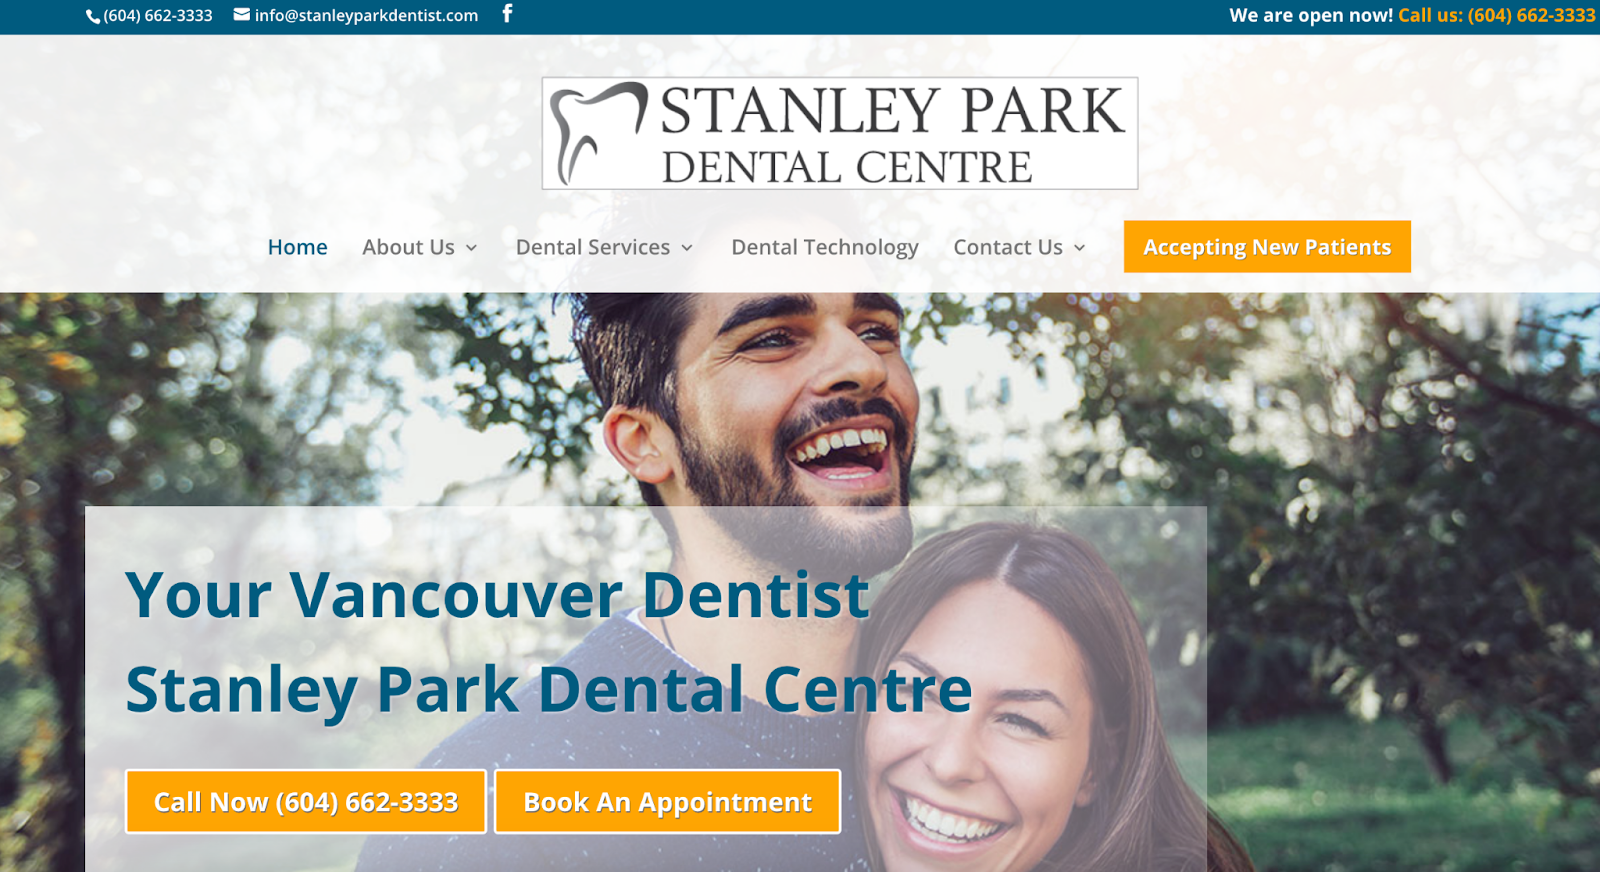 Stanley Park Dental Centre - #5 Best Dentist in Vancouver 